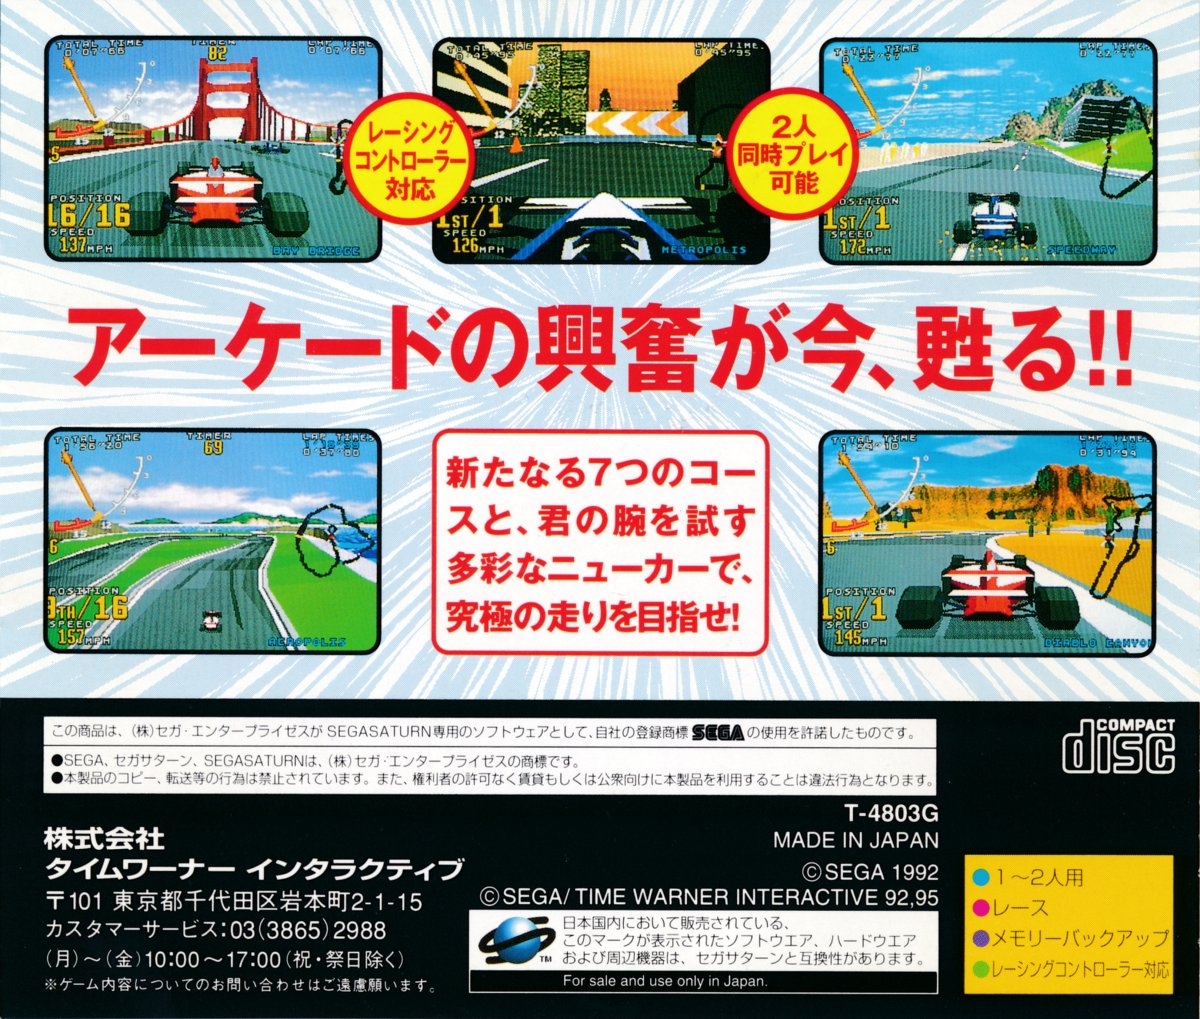 Capa do jogo Virtua Racing